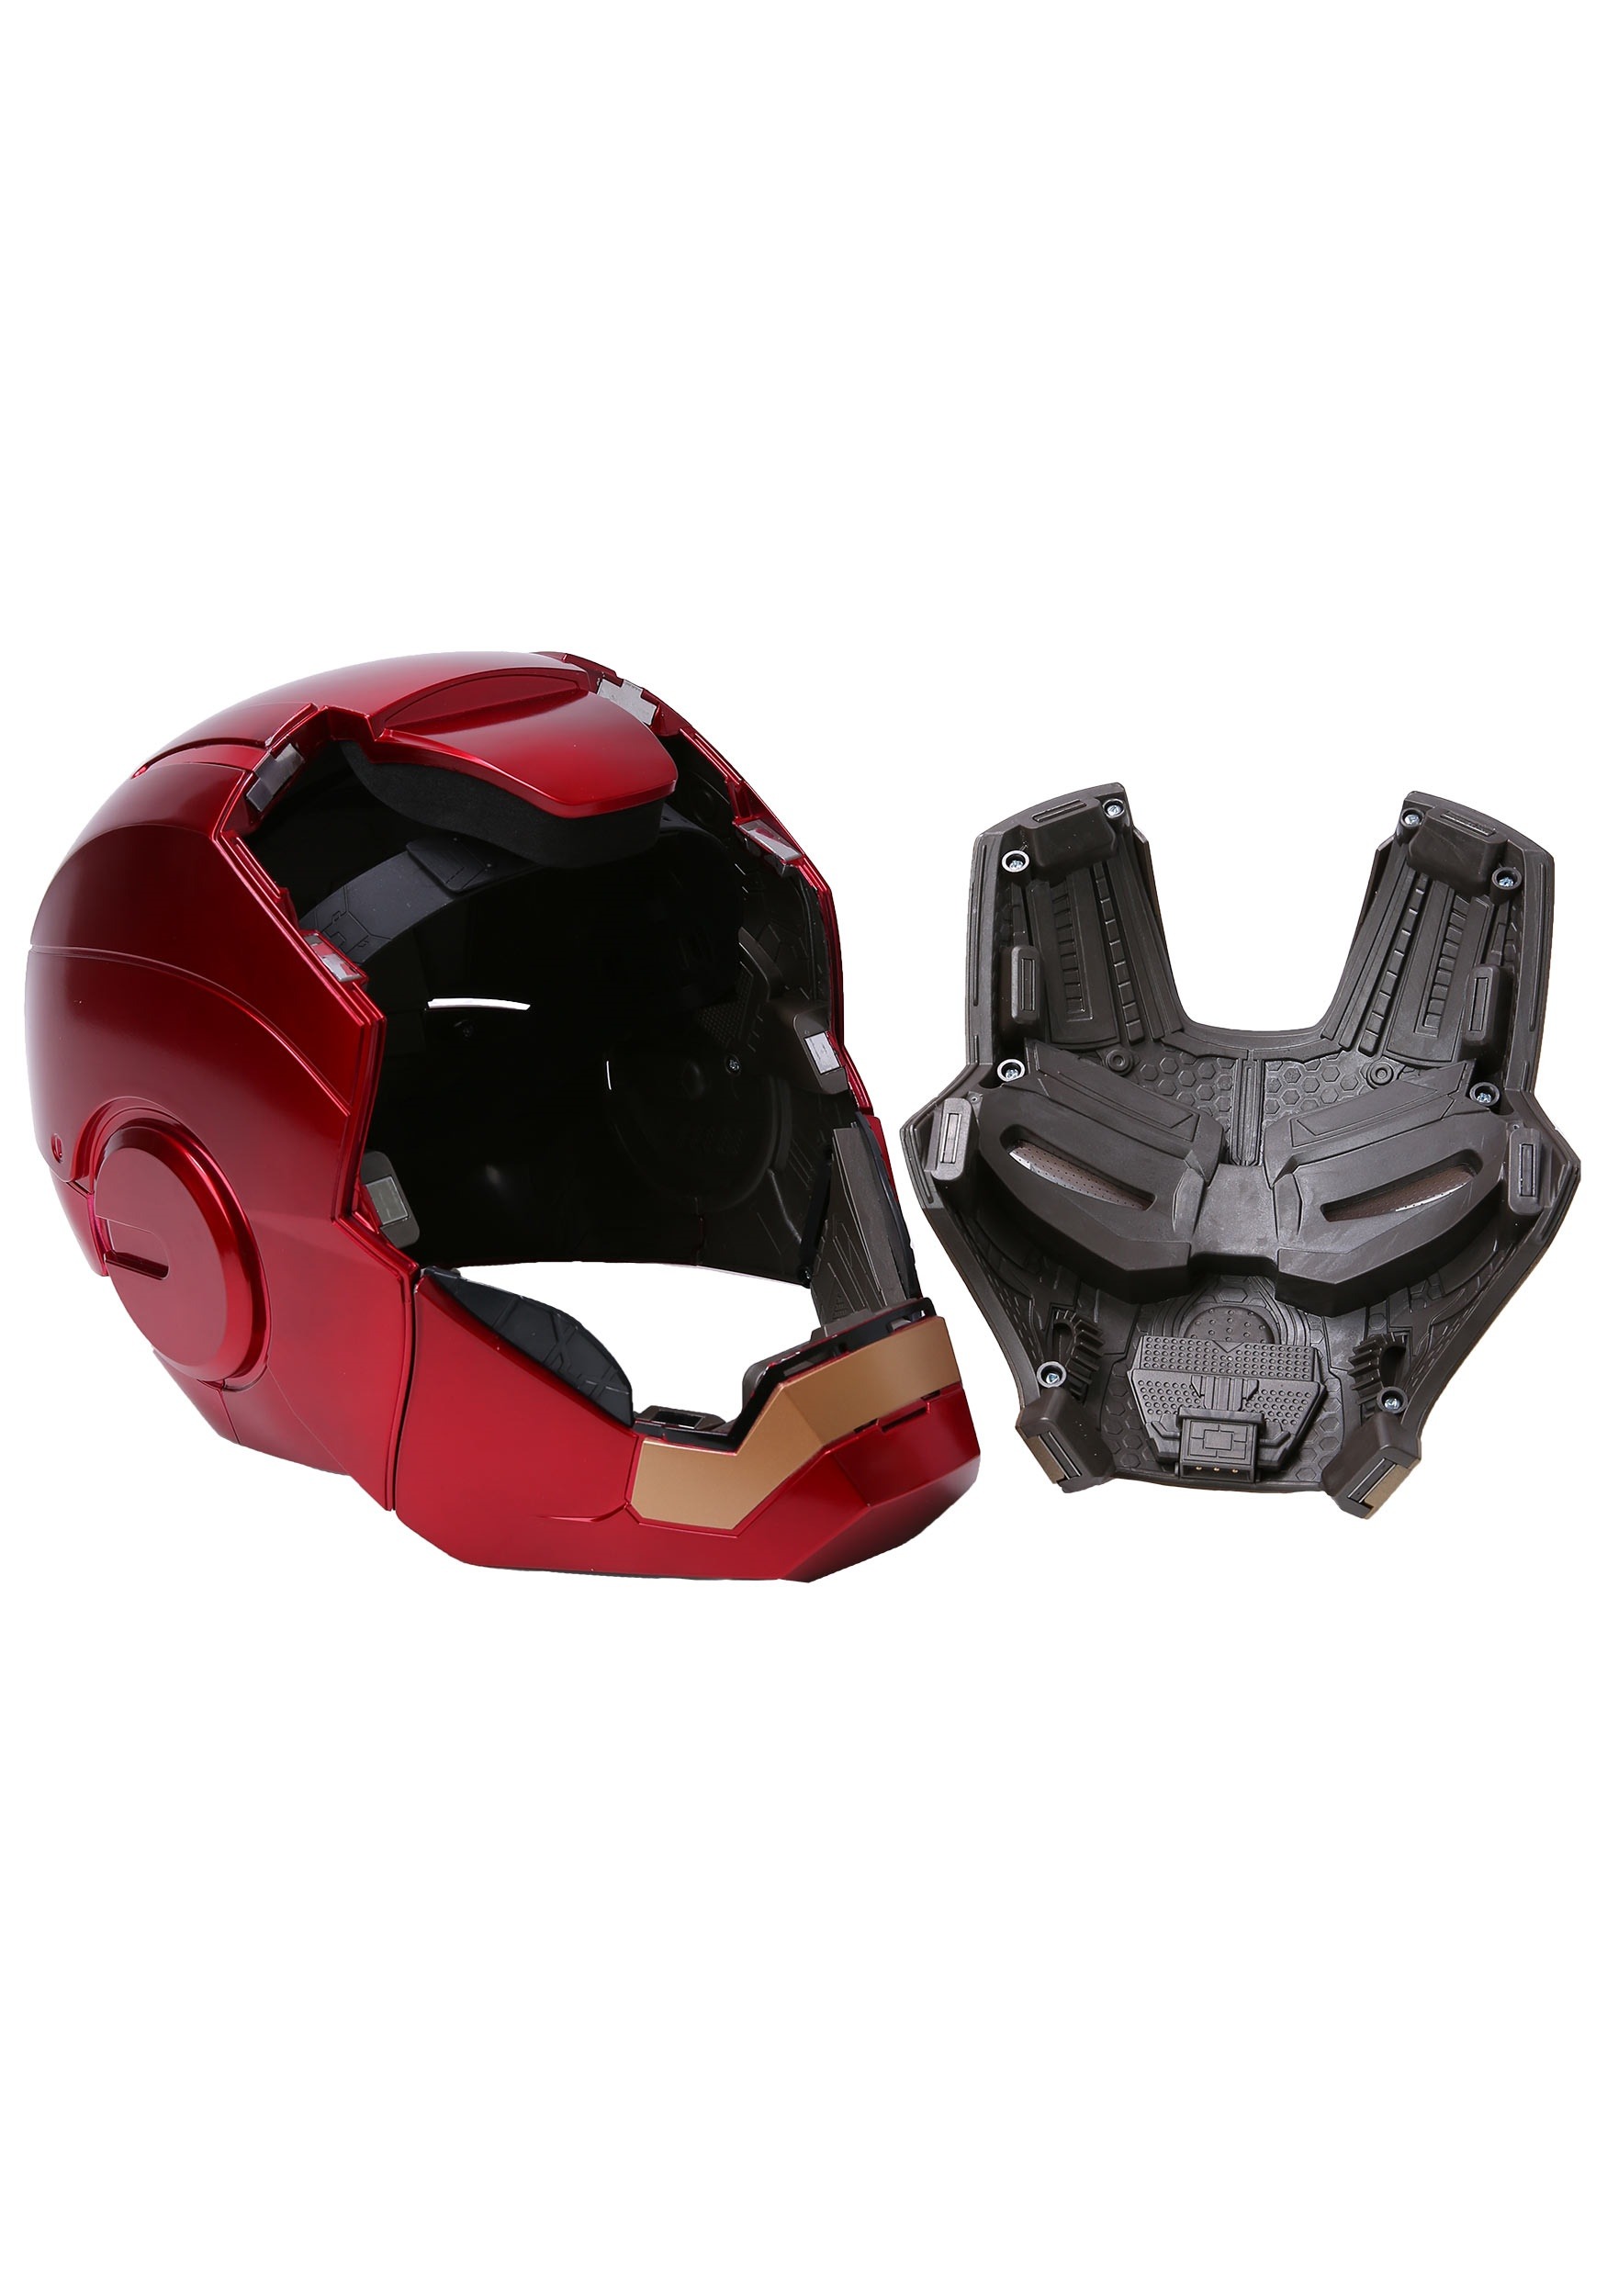 Marvel Legends Gear Iron Man Helmet Replica1750 x 2500